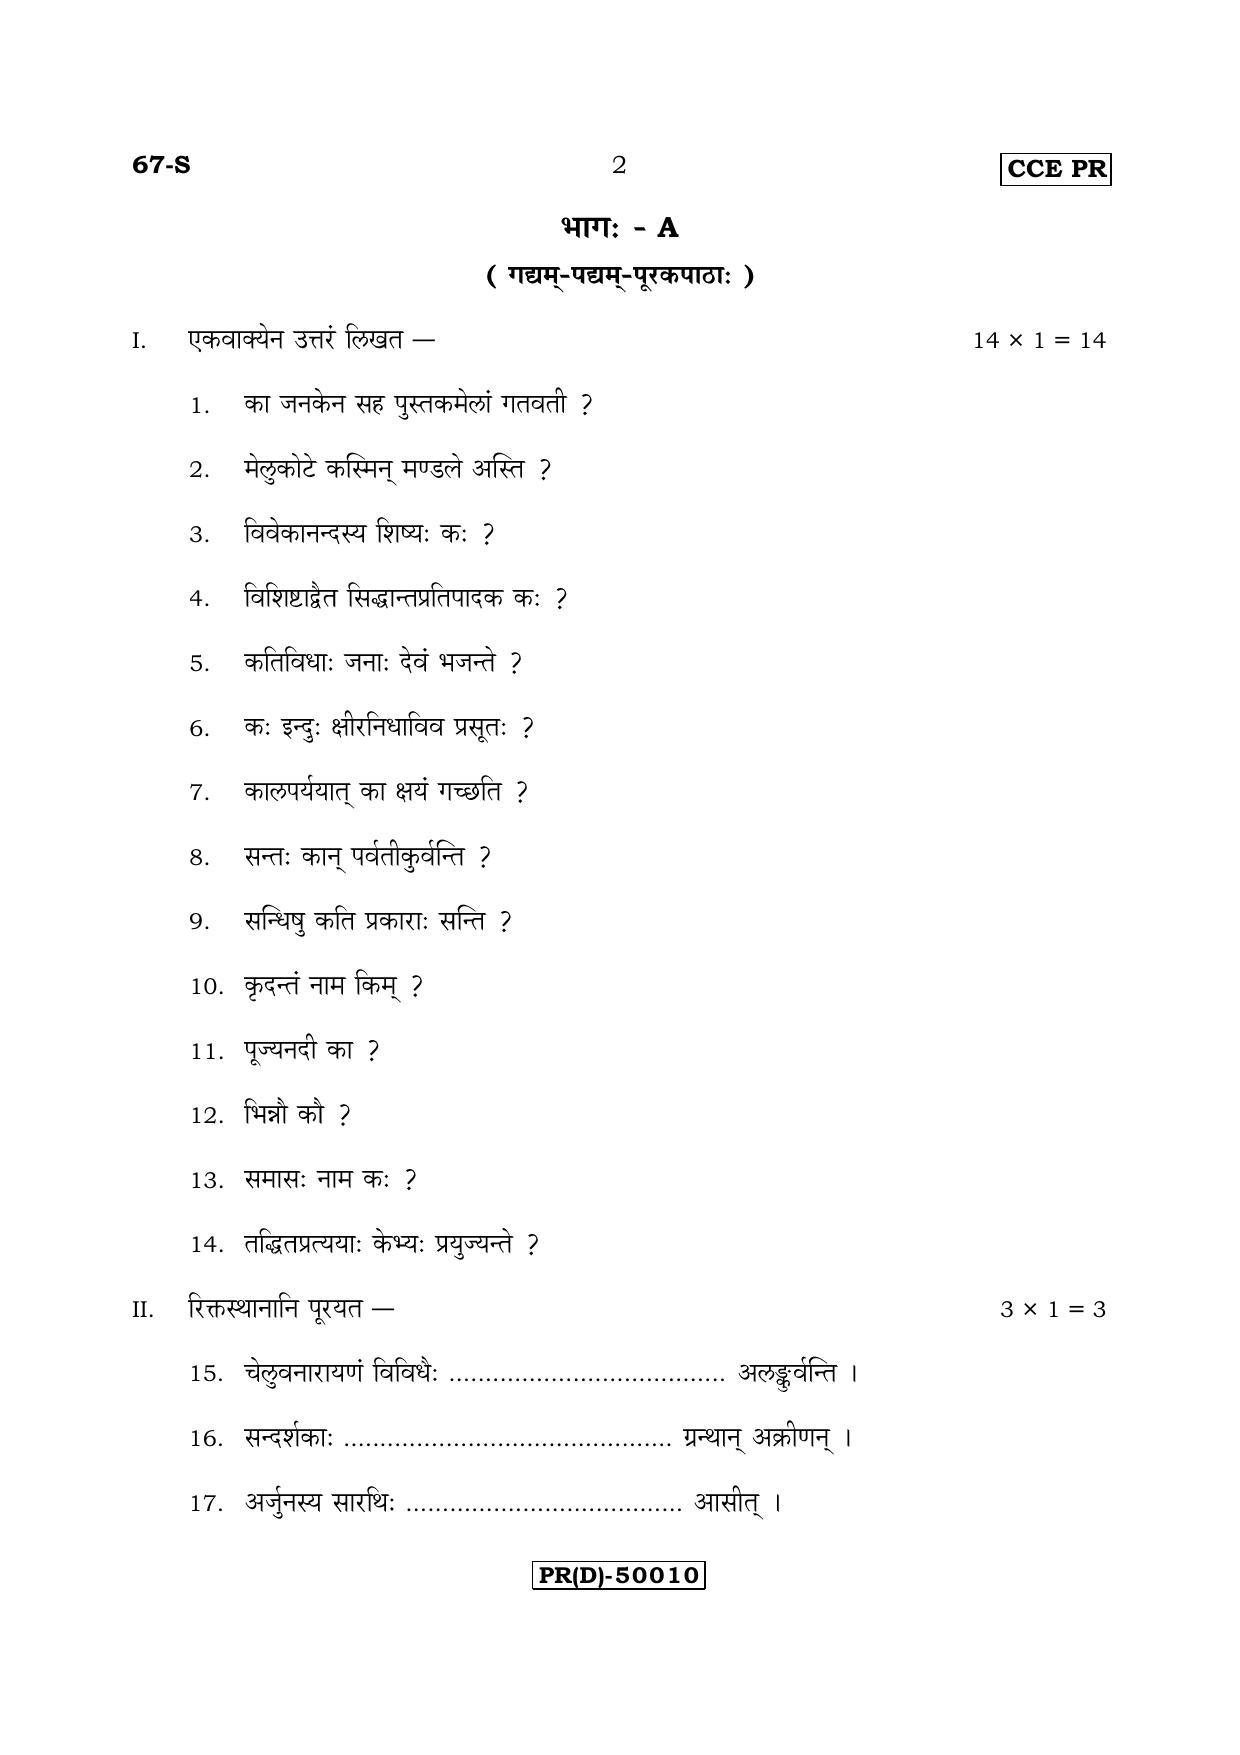 Karnataka SSLC Sanskrit - Third Language - SANSKRIT (67-S-(PR) (UN-Revised)_318) (Supplementary) June 2018 Question Paper - Page 2